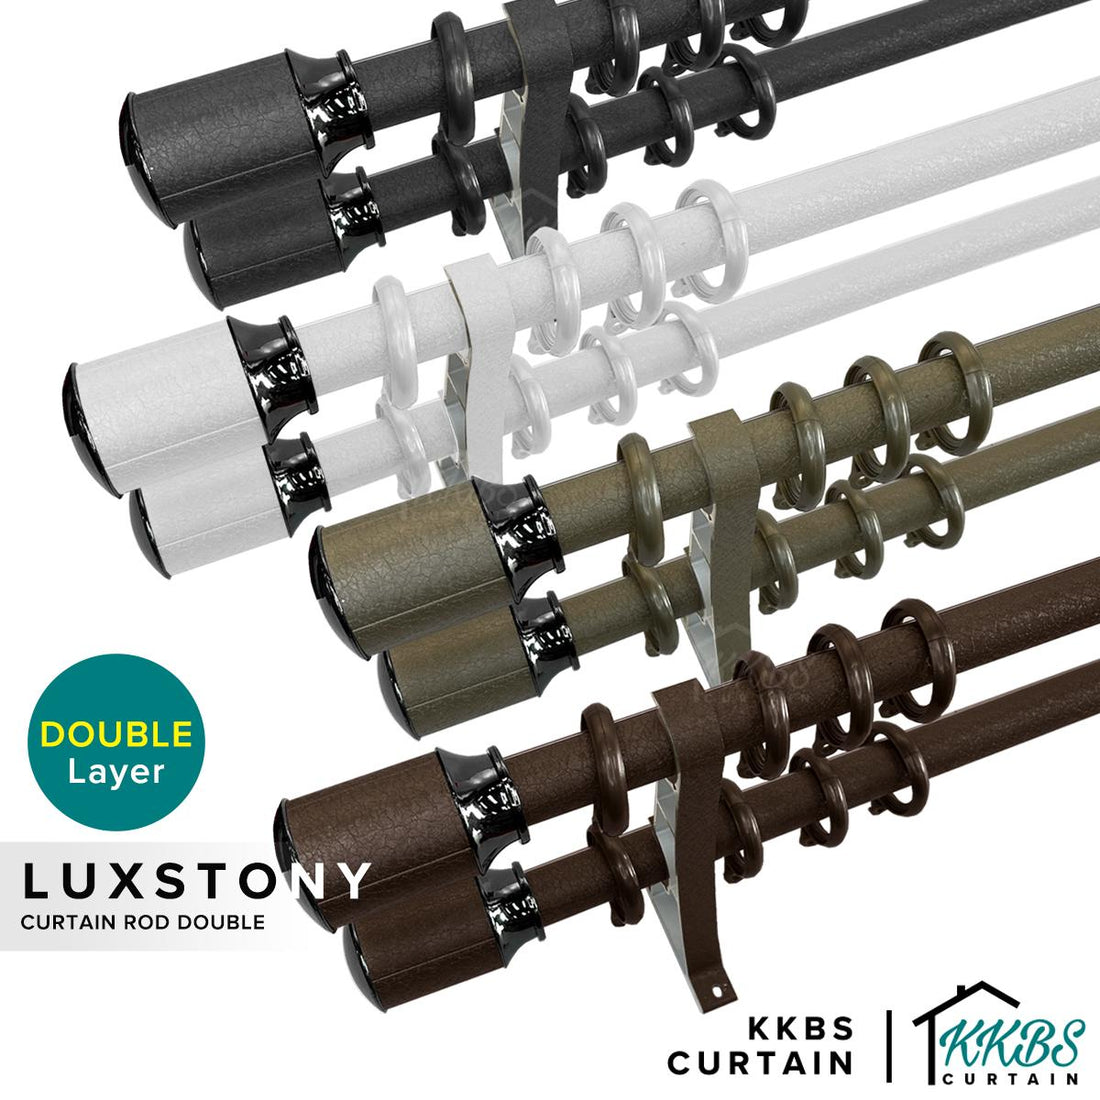 Luxstony Curtain Rod Double Complete Set